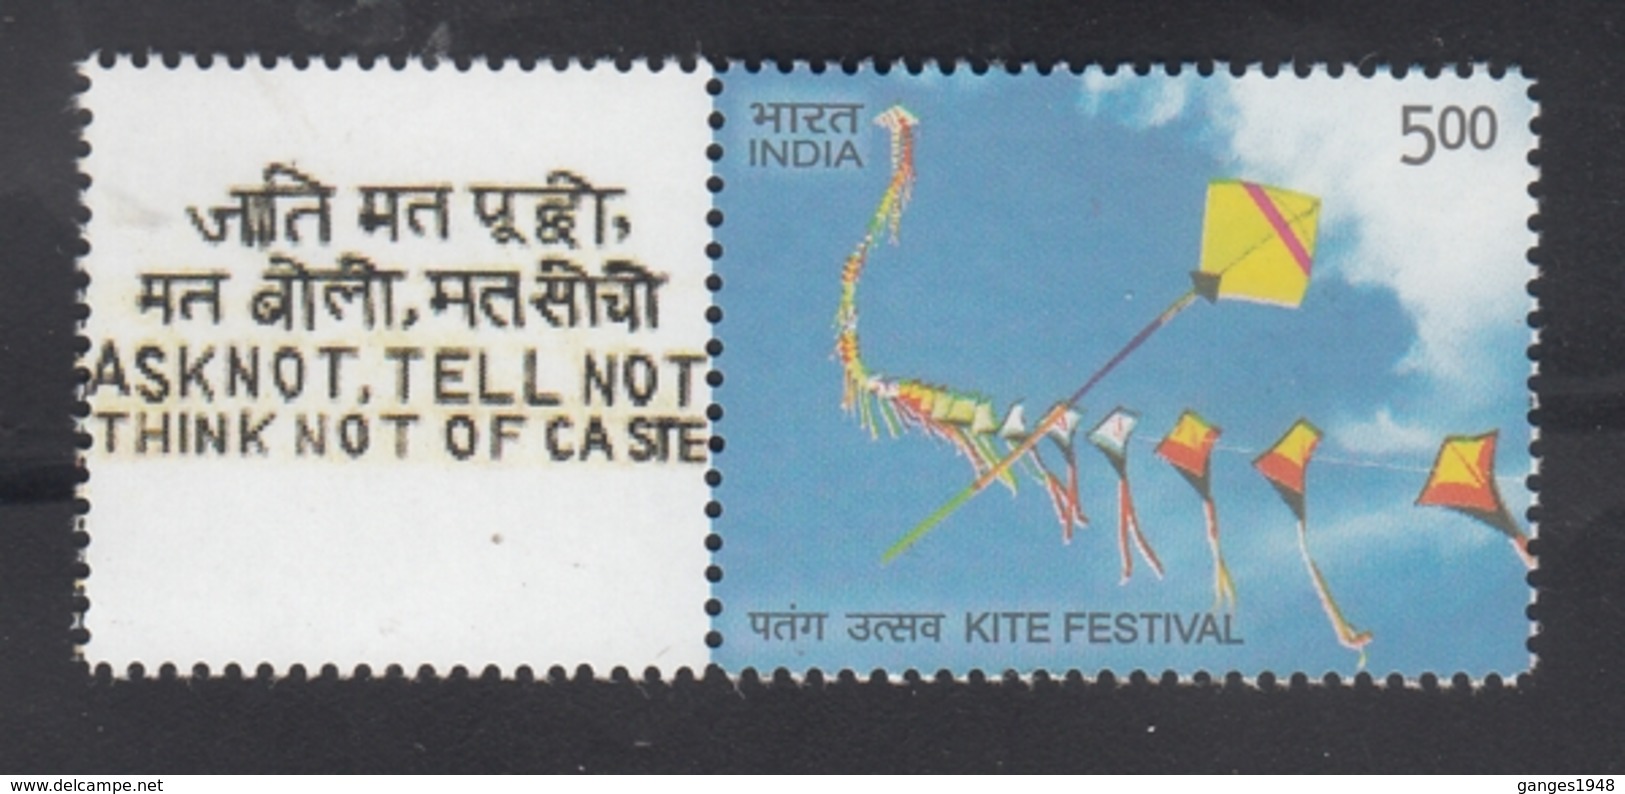 India  2016  Mahatma Gandhi  My Stamp  Kite Festival  Ahmedabad Issue  # 16870  D  Inde Indien - Mahatma Gandhi